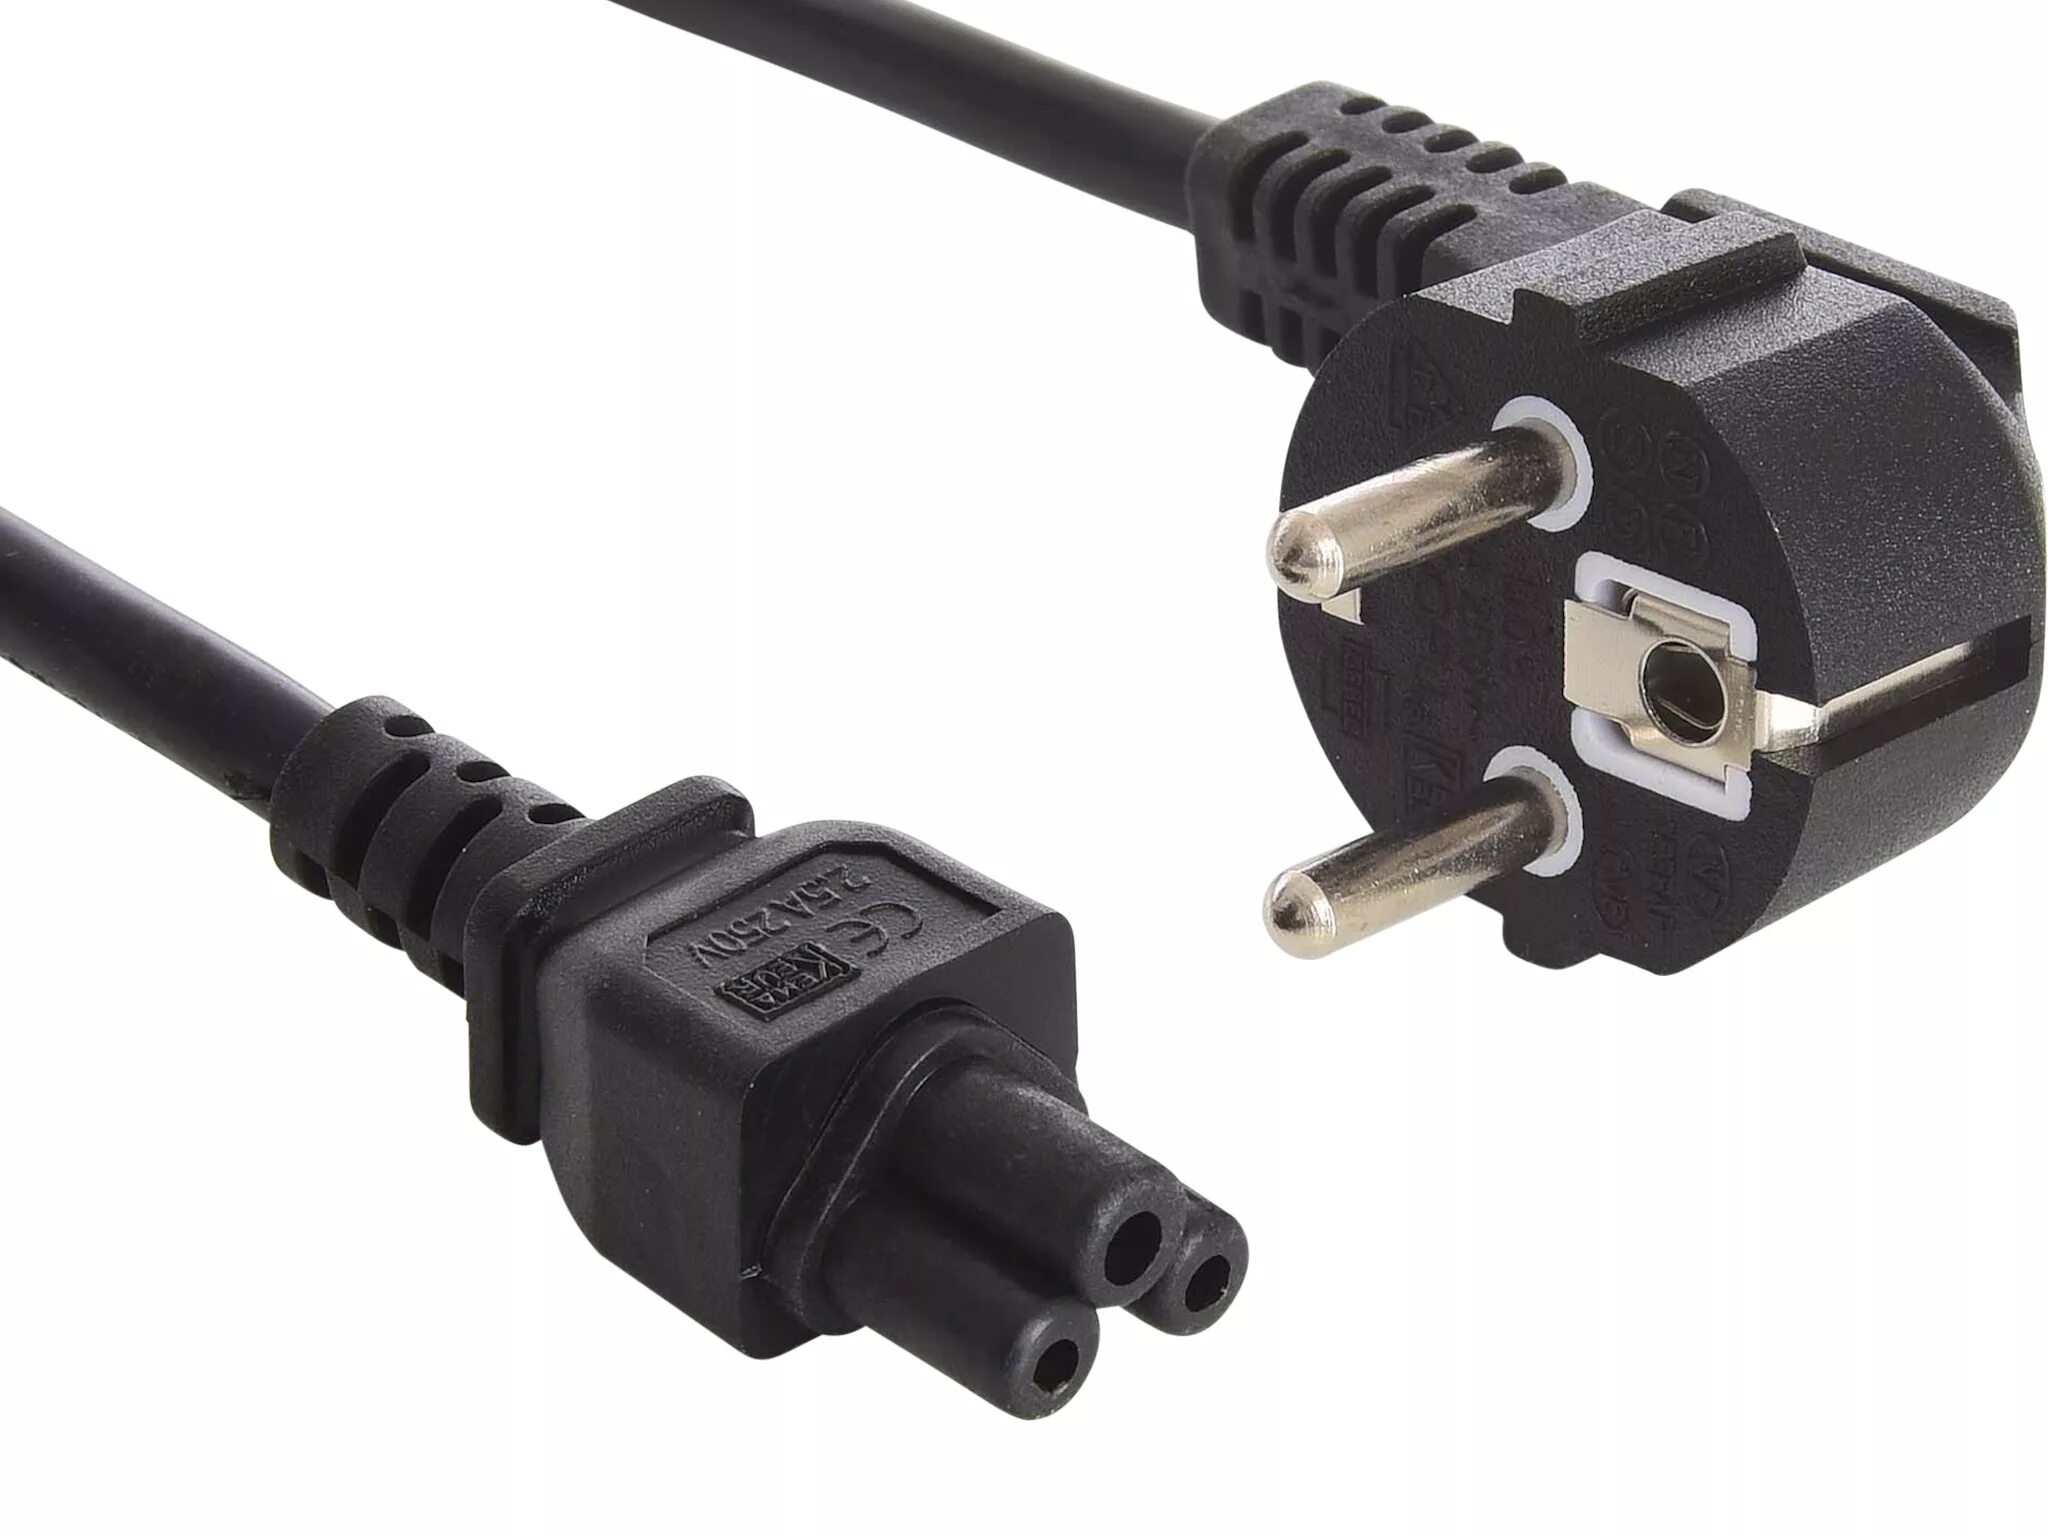 Power Cord - кабель питания 220v. Удлинитель кабеля питания 8m-8f. Кабель питания ATCOM at16134, 1.8м, 2 Pin. Voltman PC Power Cable 1.5m.